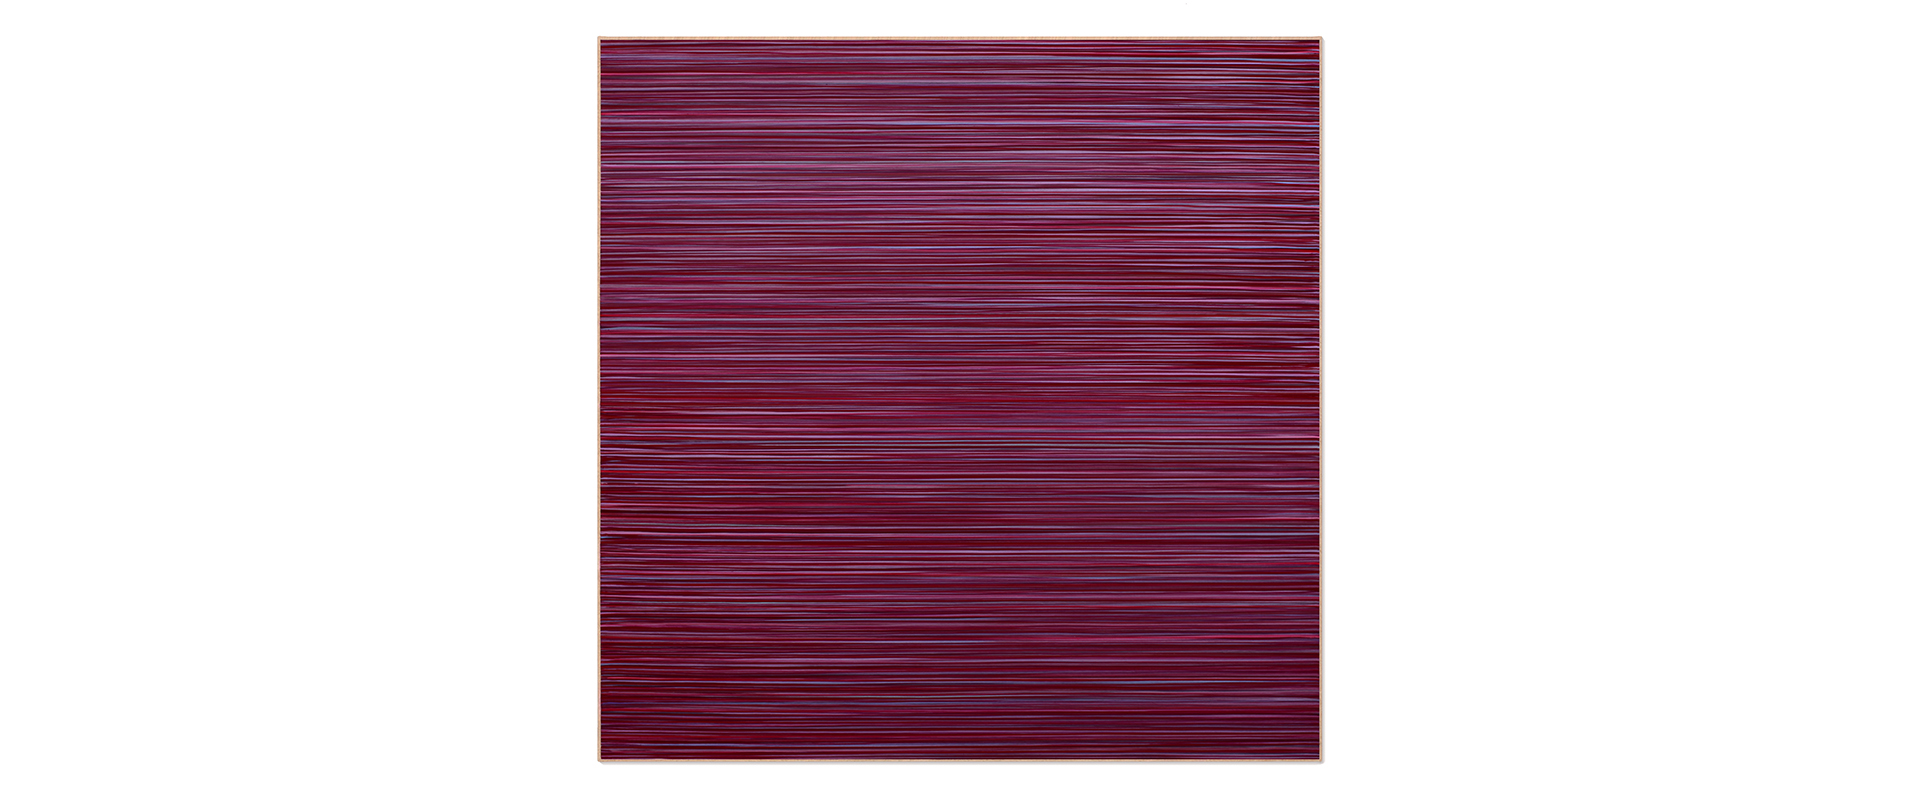 Ohne Titel (2112) – 2021, Acryl auf Leinwand, 90 x 90 cm